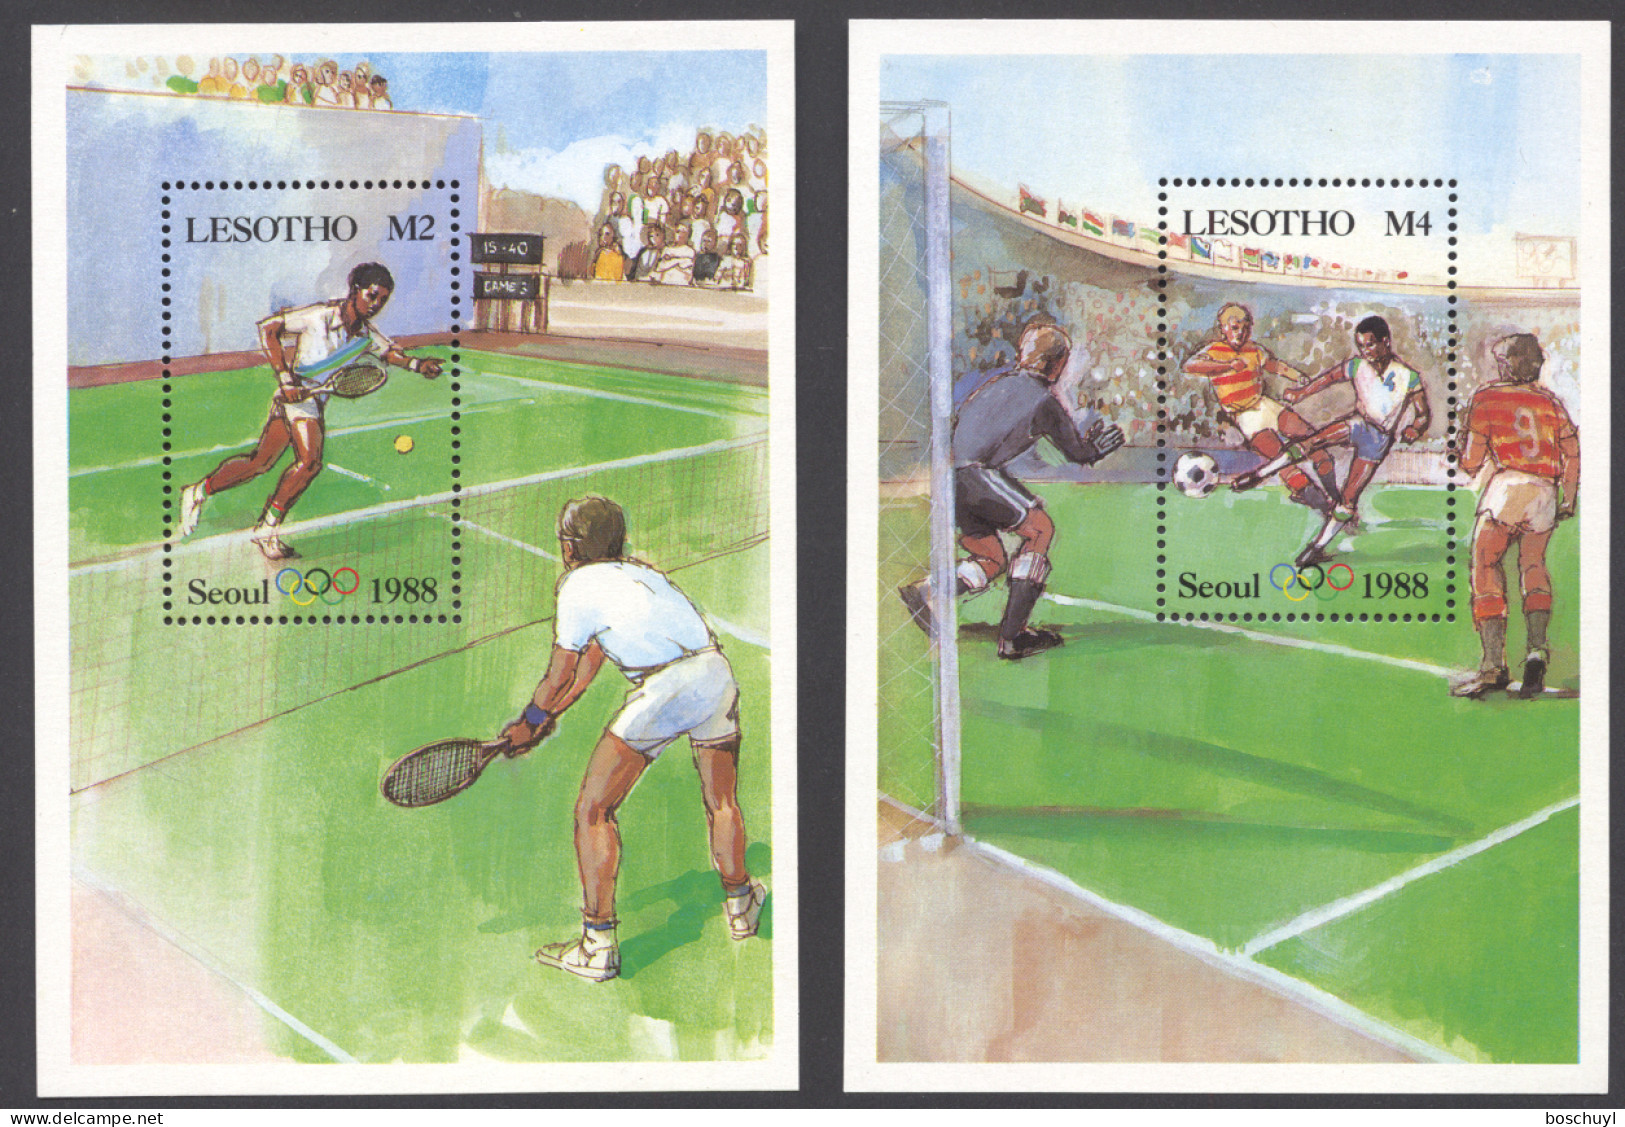 Lesotho, 1987, Olympic Summer Games Seoul, Tennis, Soccer, Football, Sports, MNH, Michel Block 39-40 - Lesotho (1966-...)